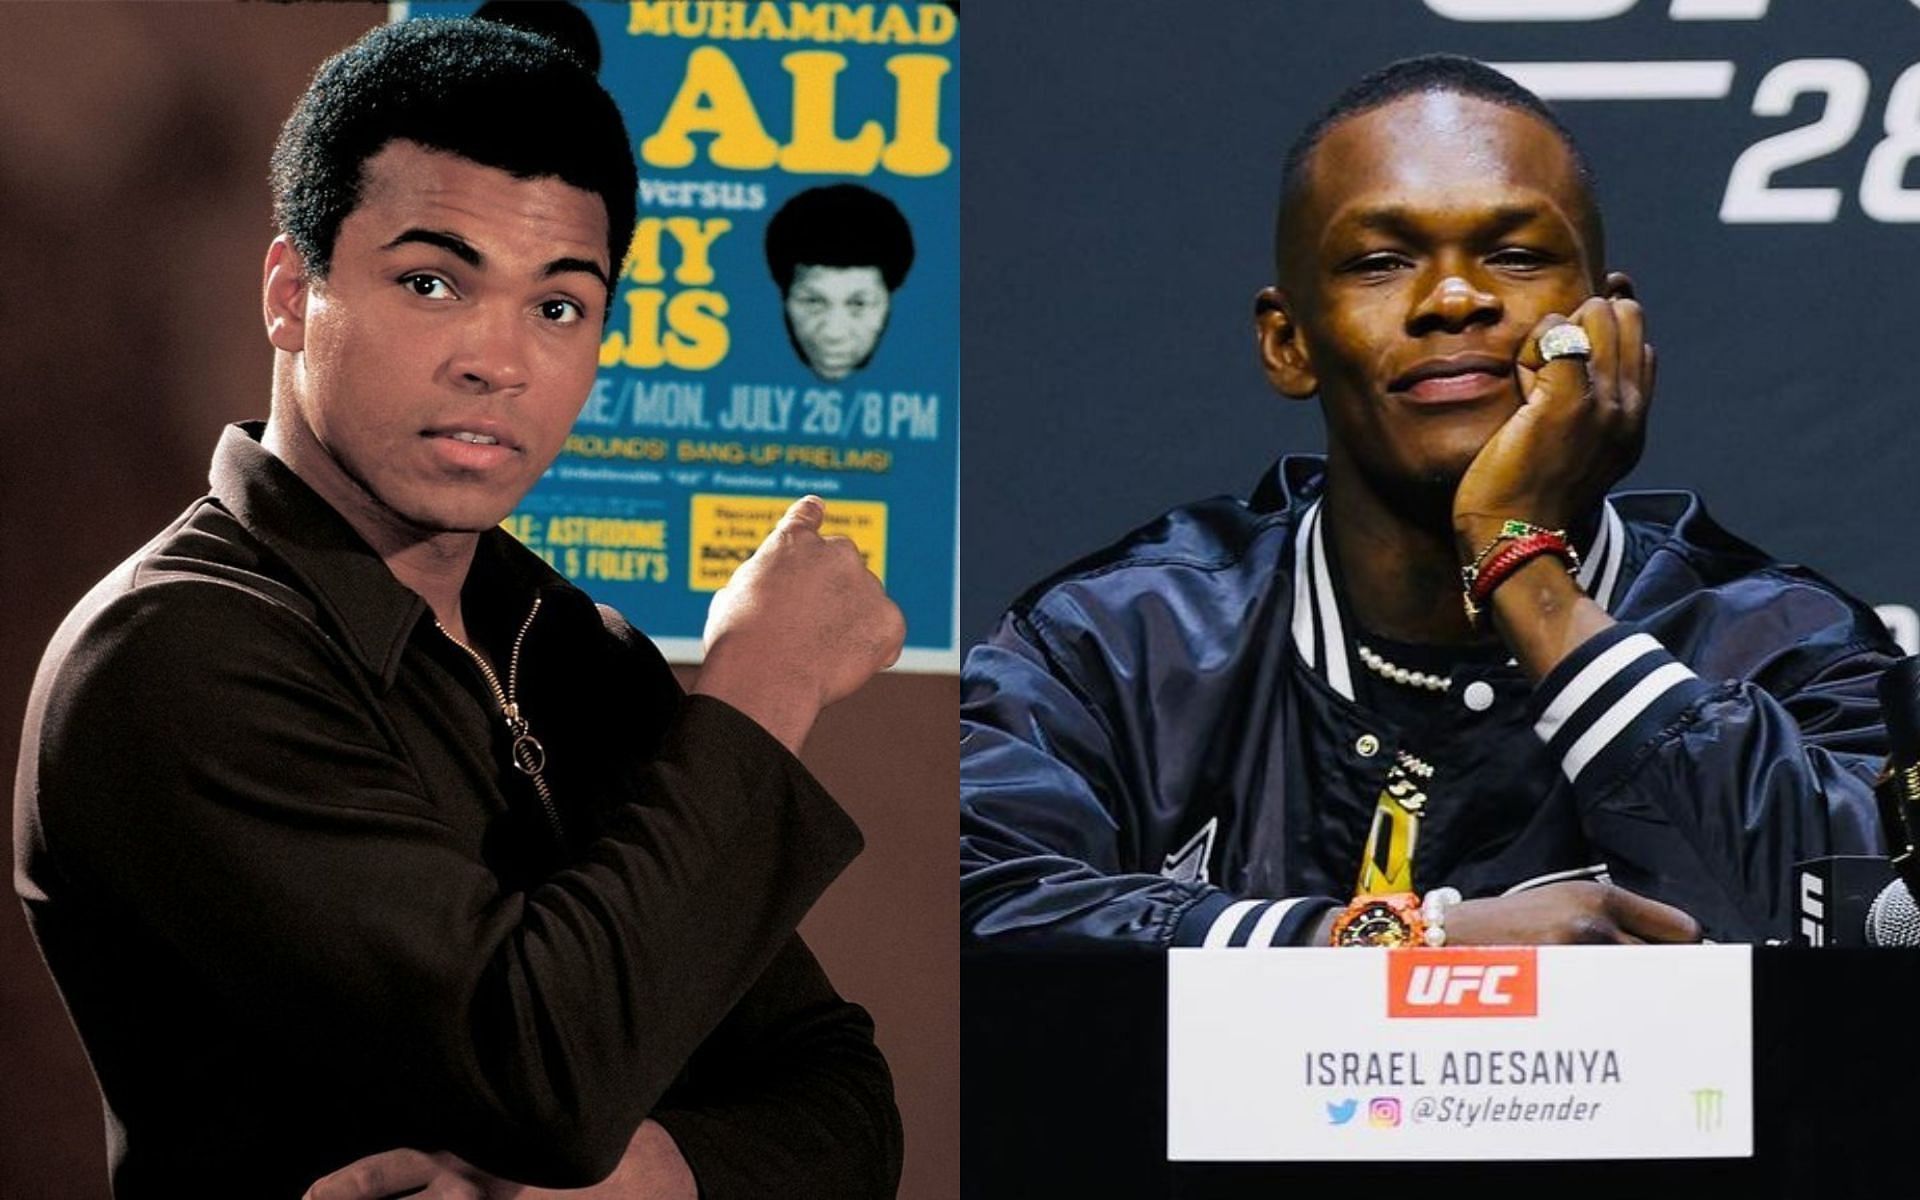 Muhammad Ali (Left) and Israel Adesanya (Right) [Images via: @muhammadali and @stylebender on Instagram]